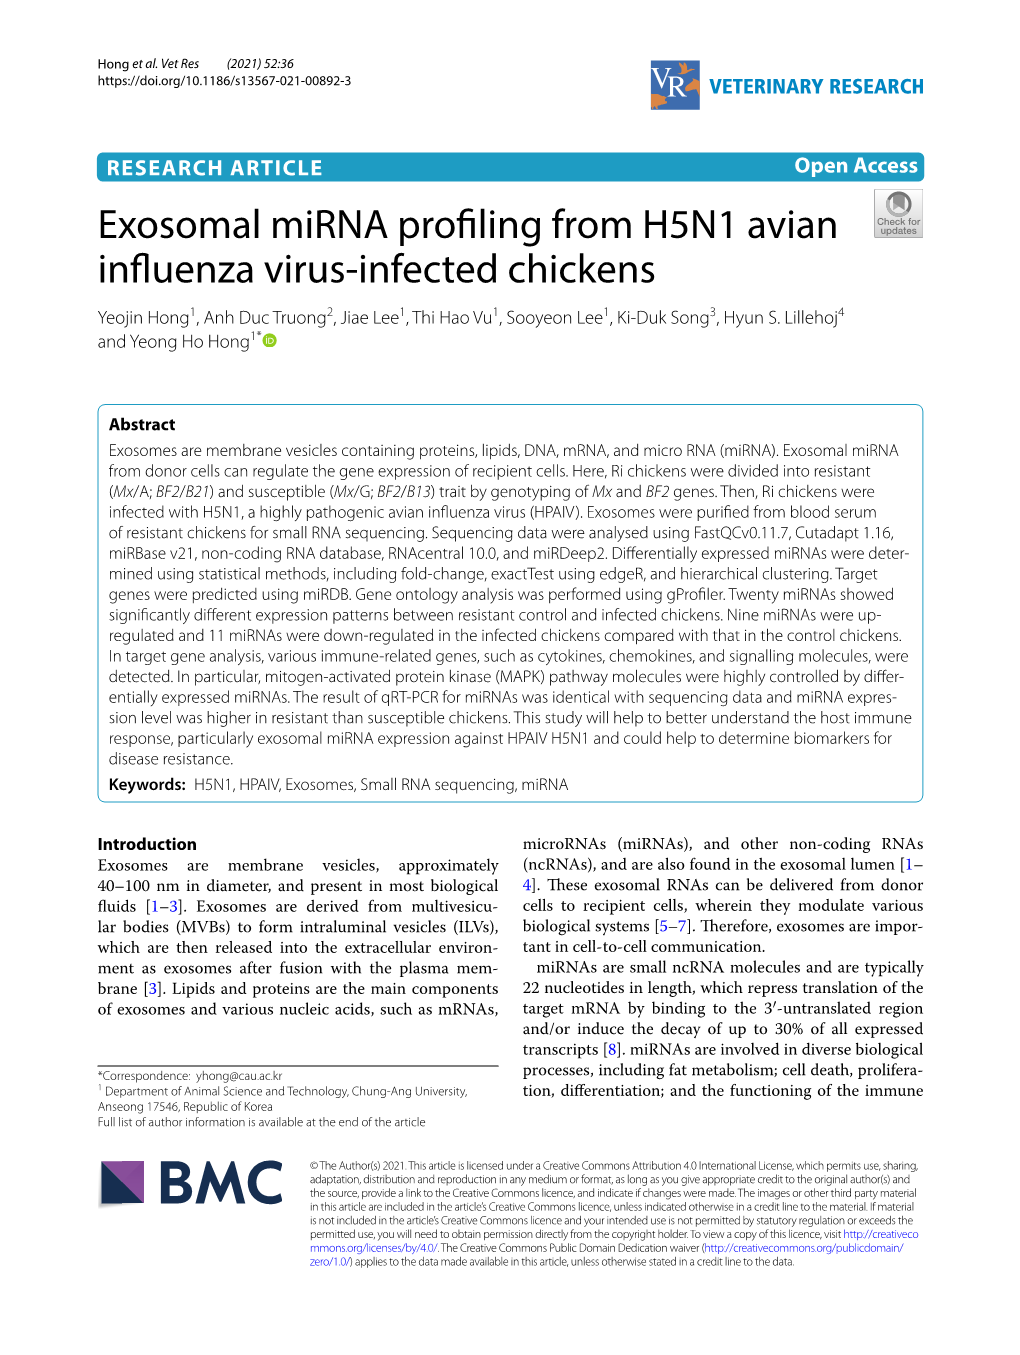 Exosomal Mirna Profiling from H5N1 Avian Influenza Virus-Infected